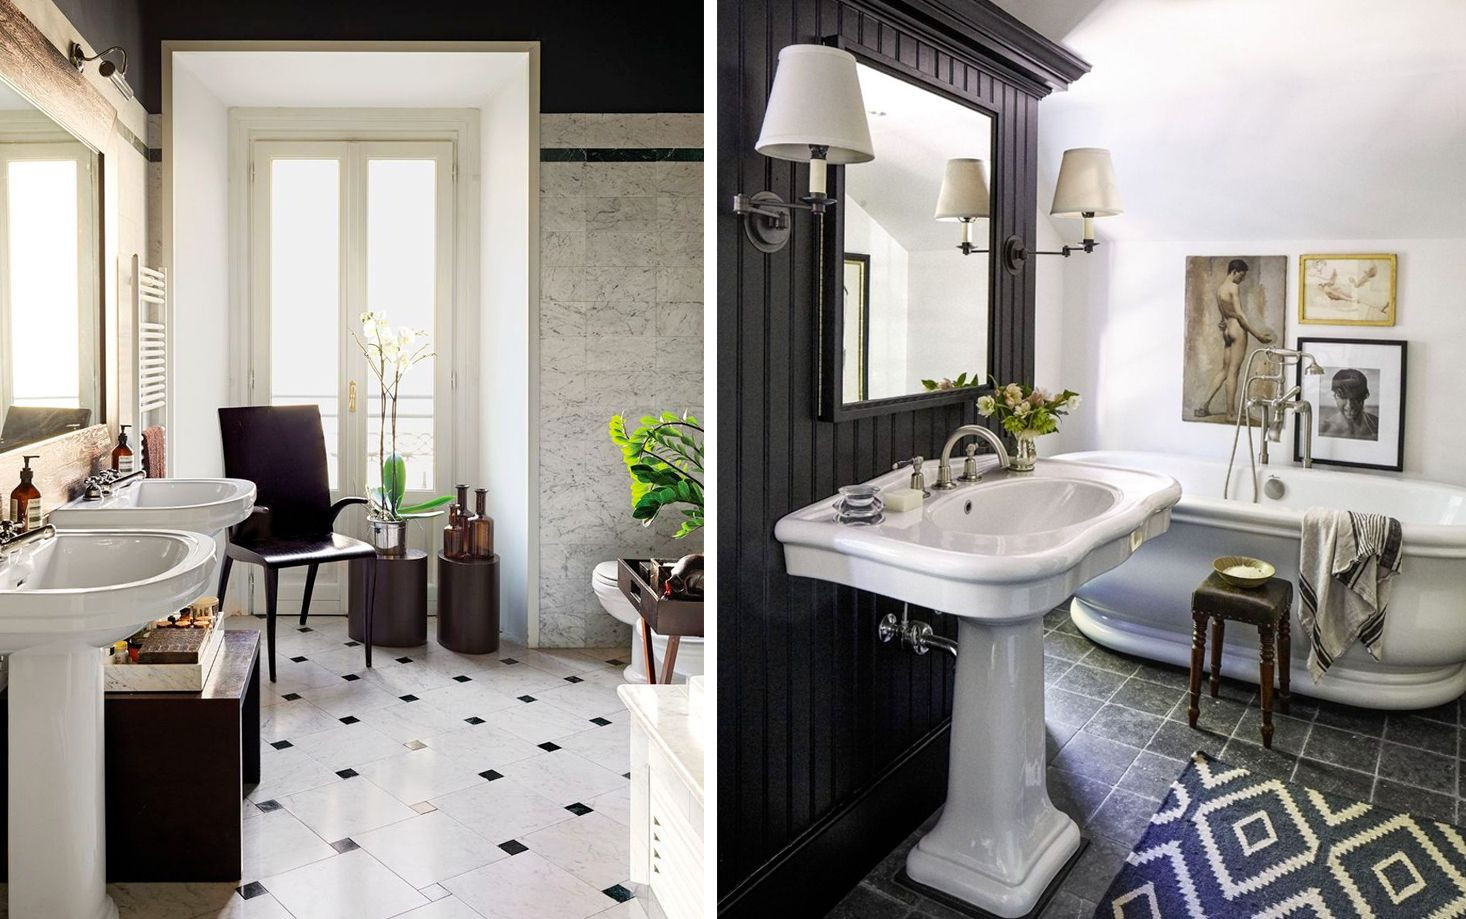 + Black & White Bathroom Design and Tile Ideas